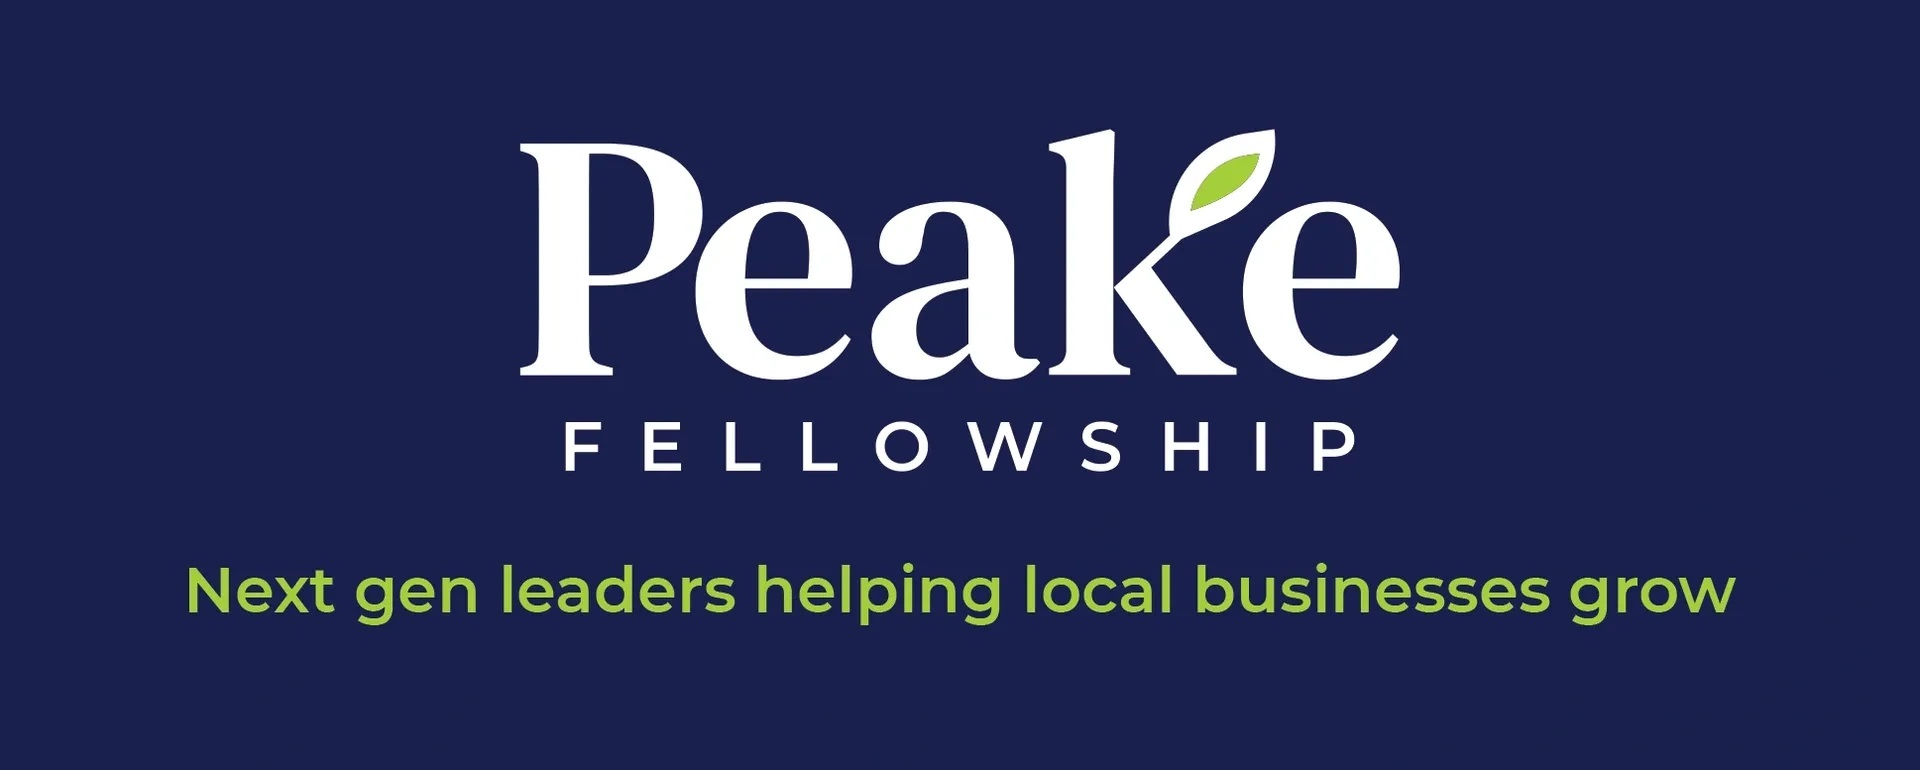 Peake Fellowship logo and tagline splash image